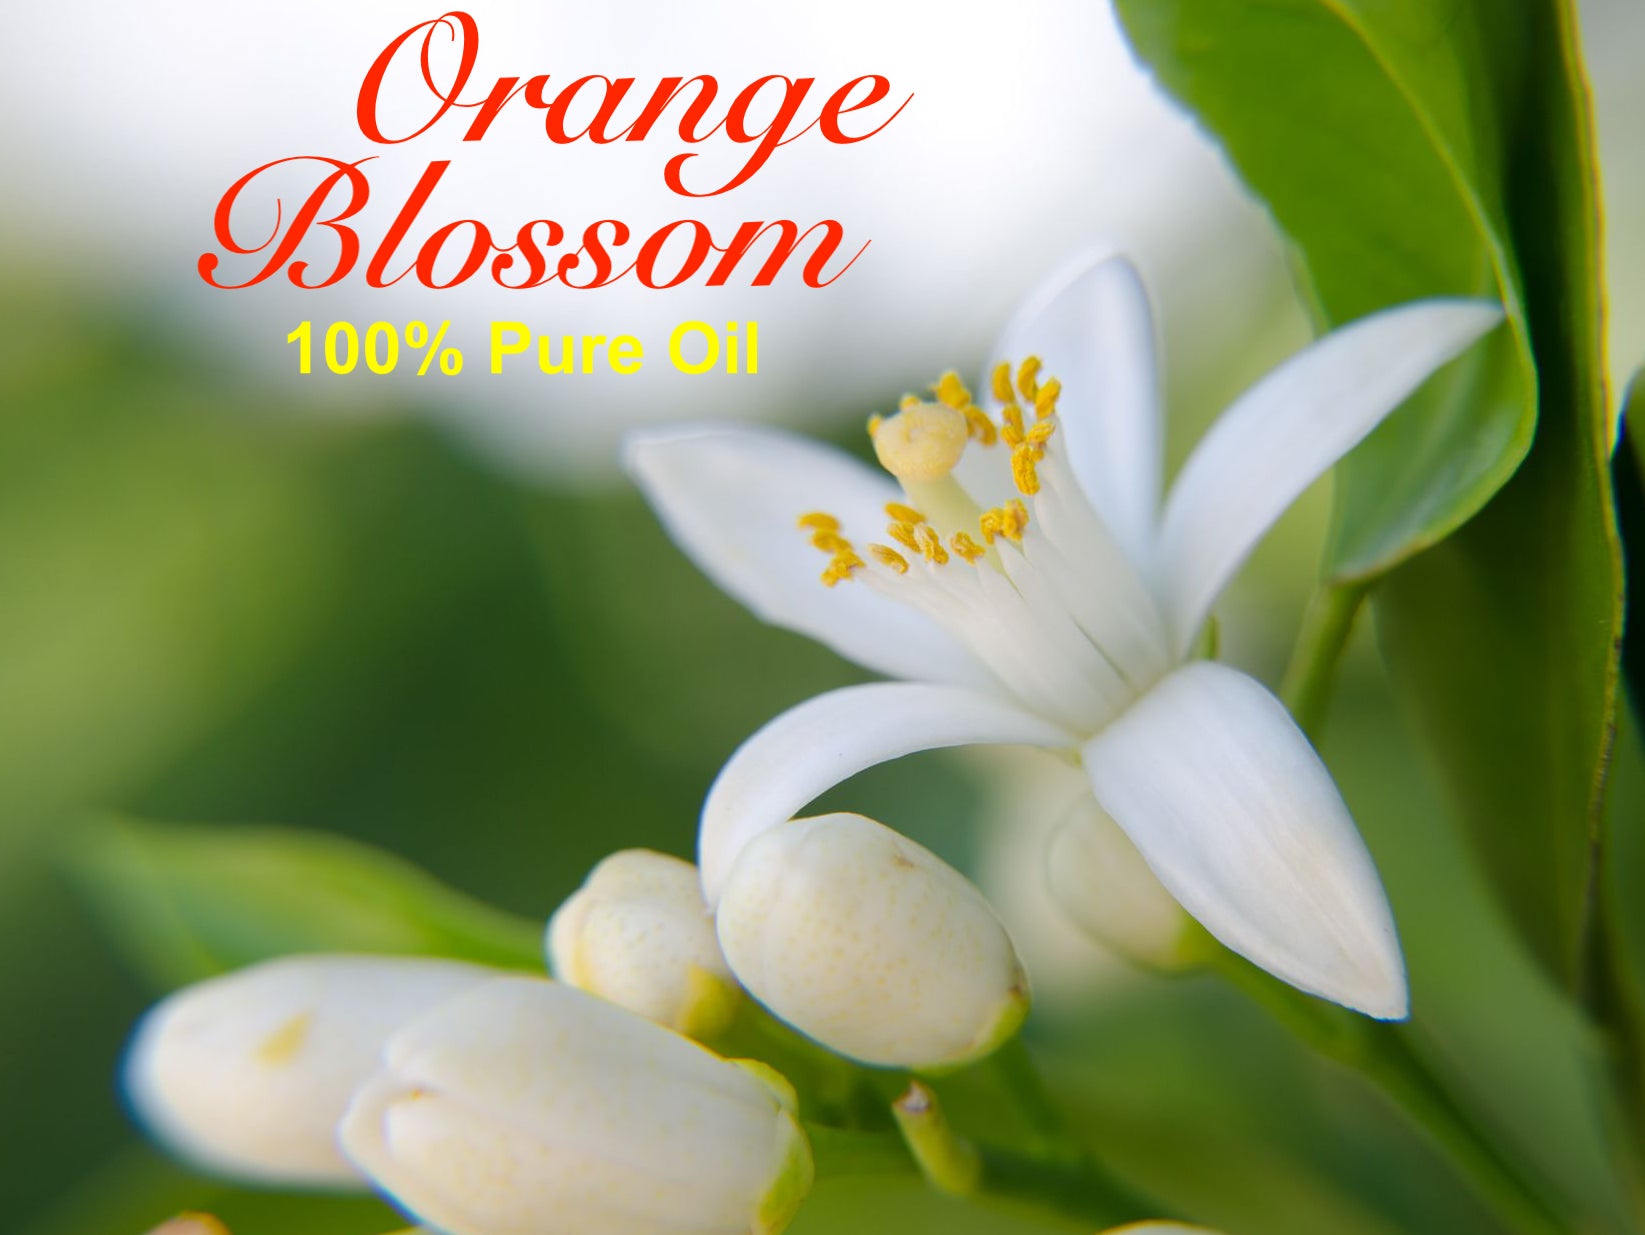 Orange Blossom Absolute